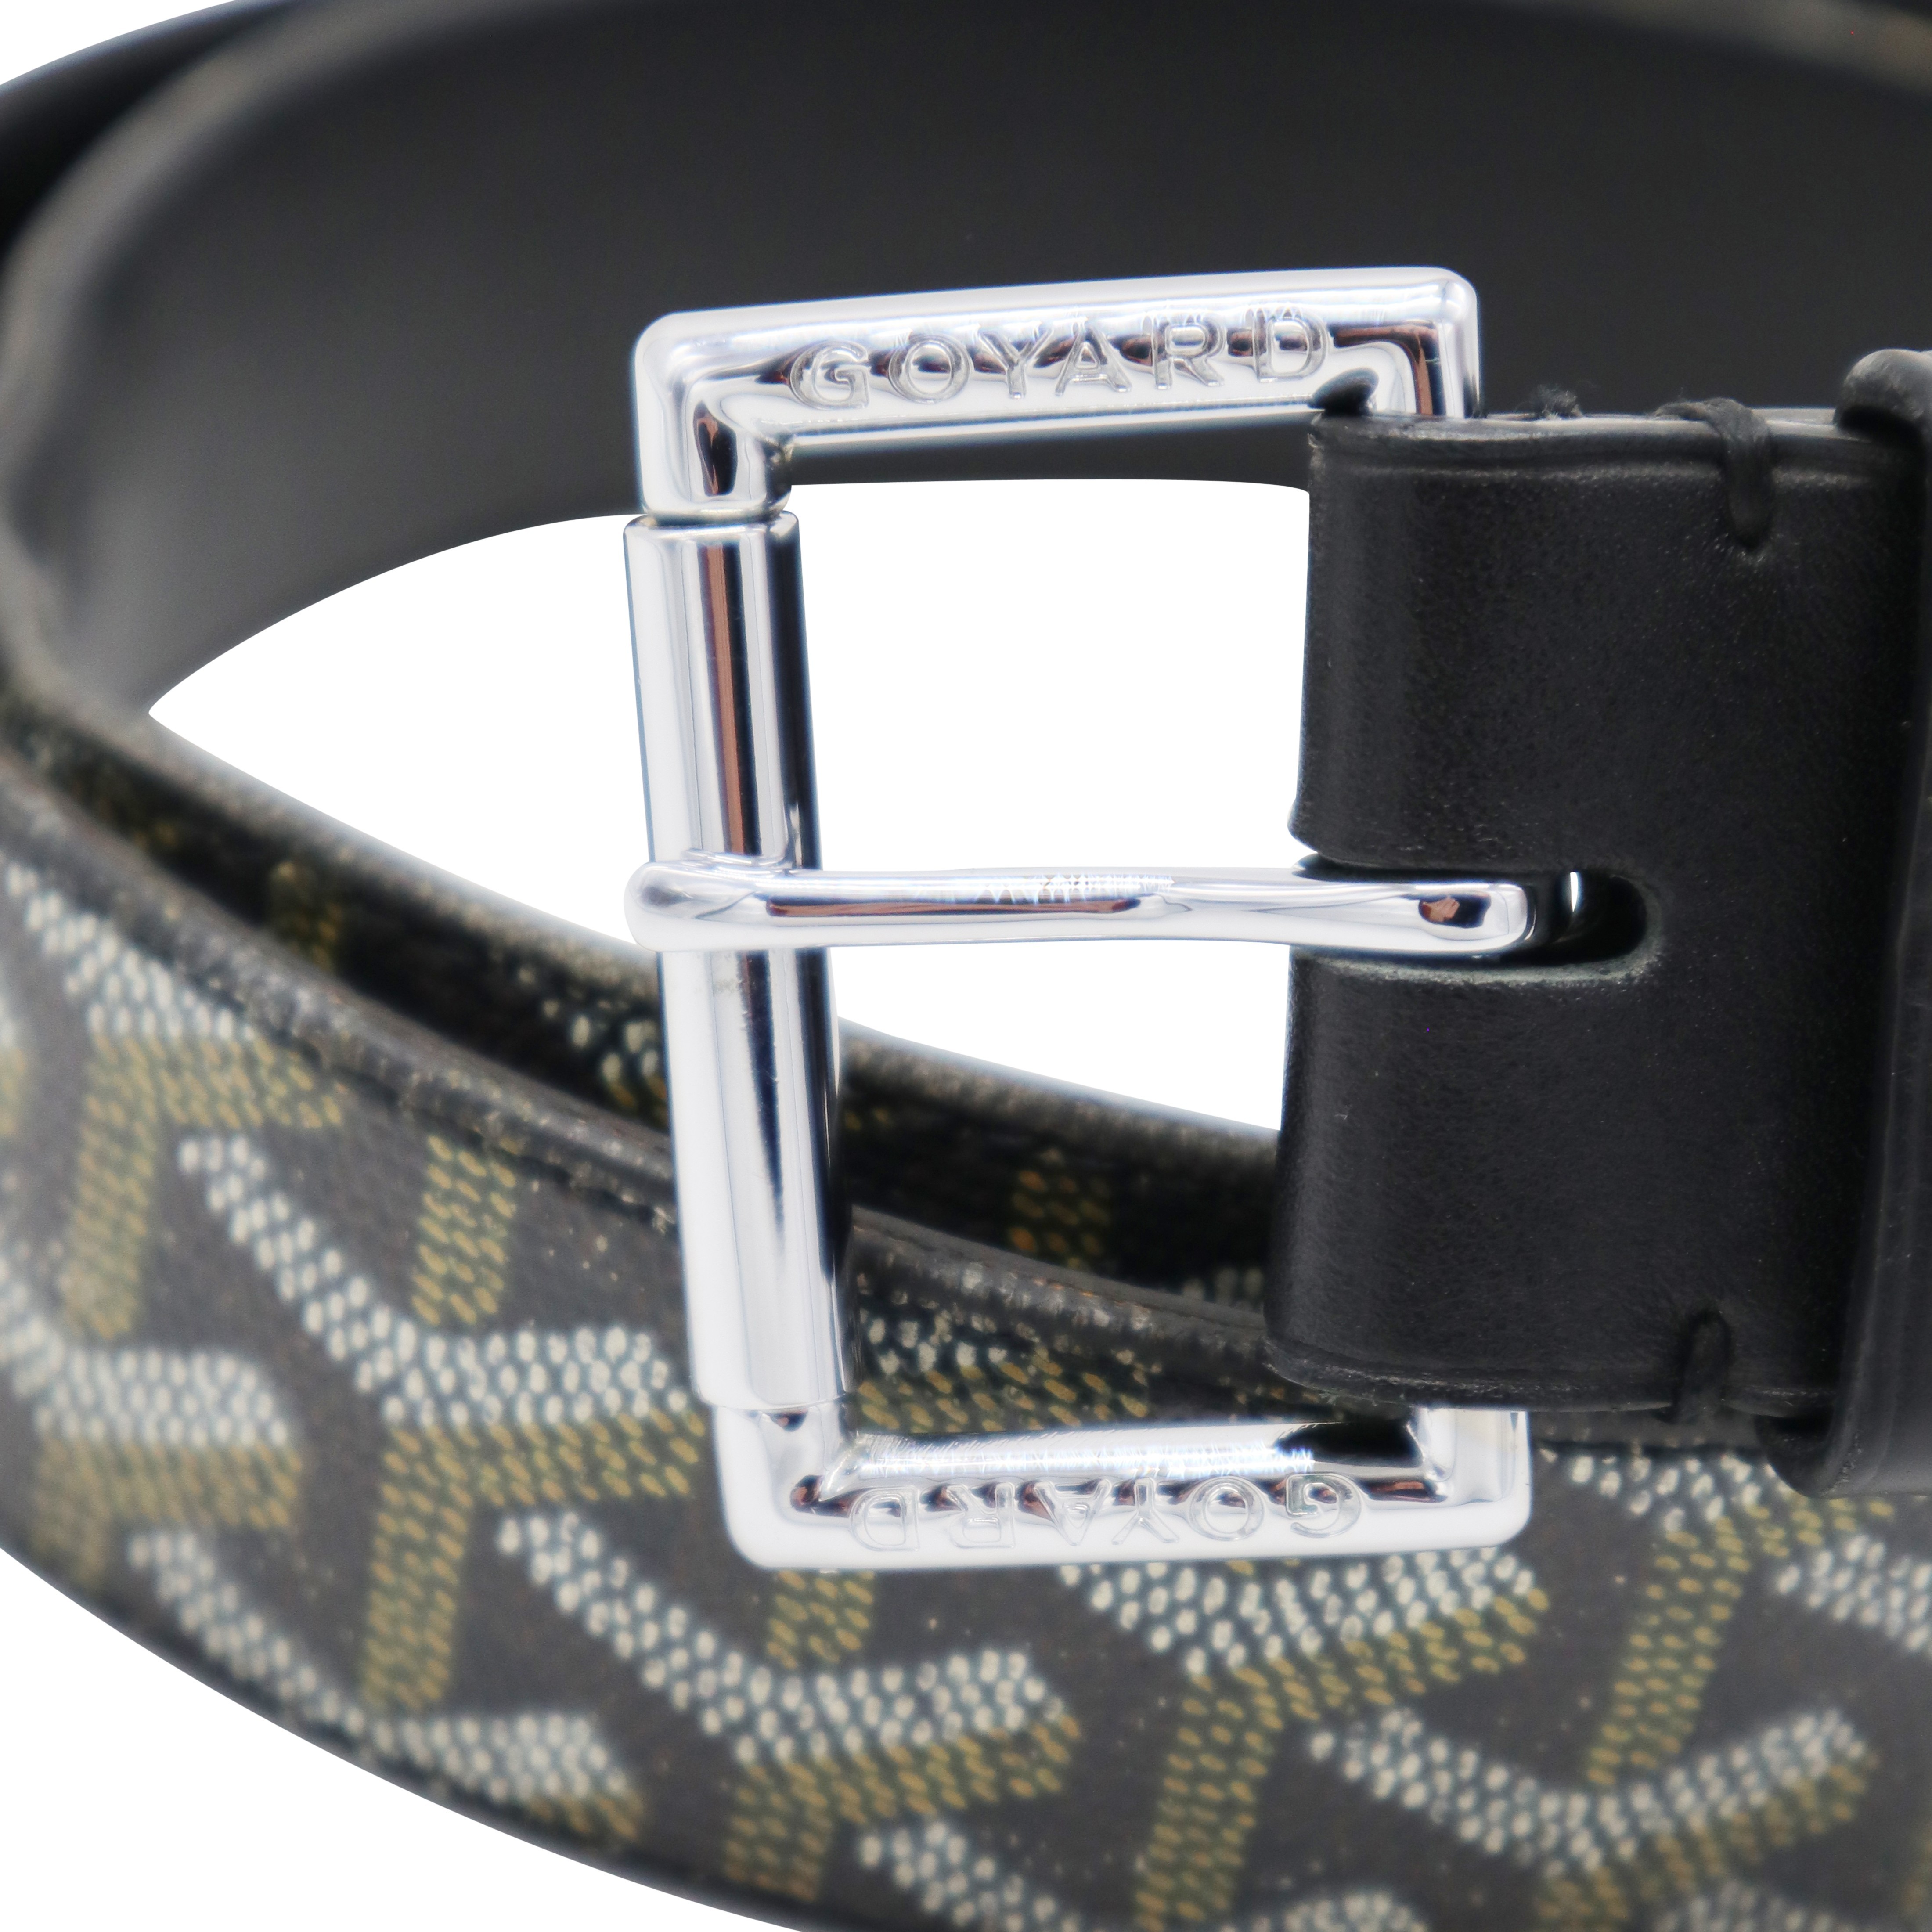 Authentic Goyard belt